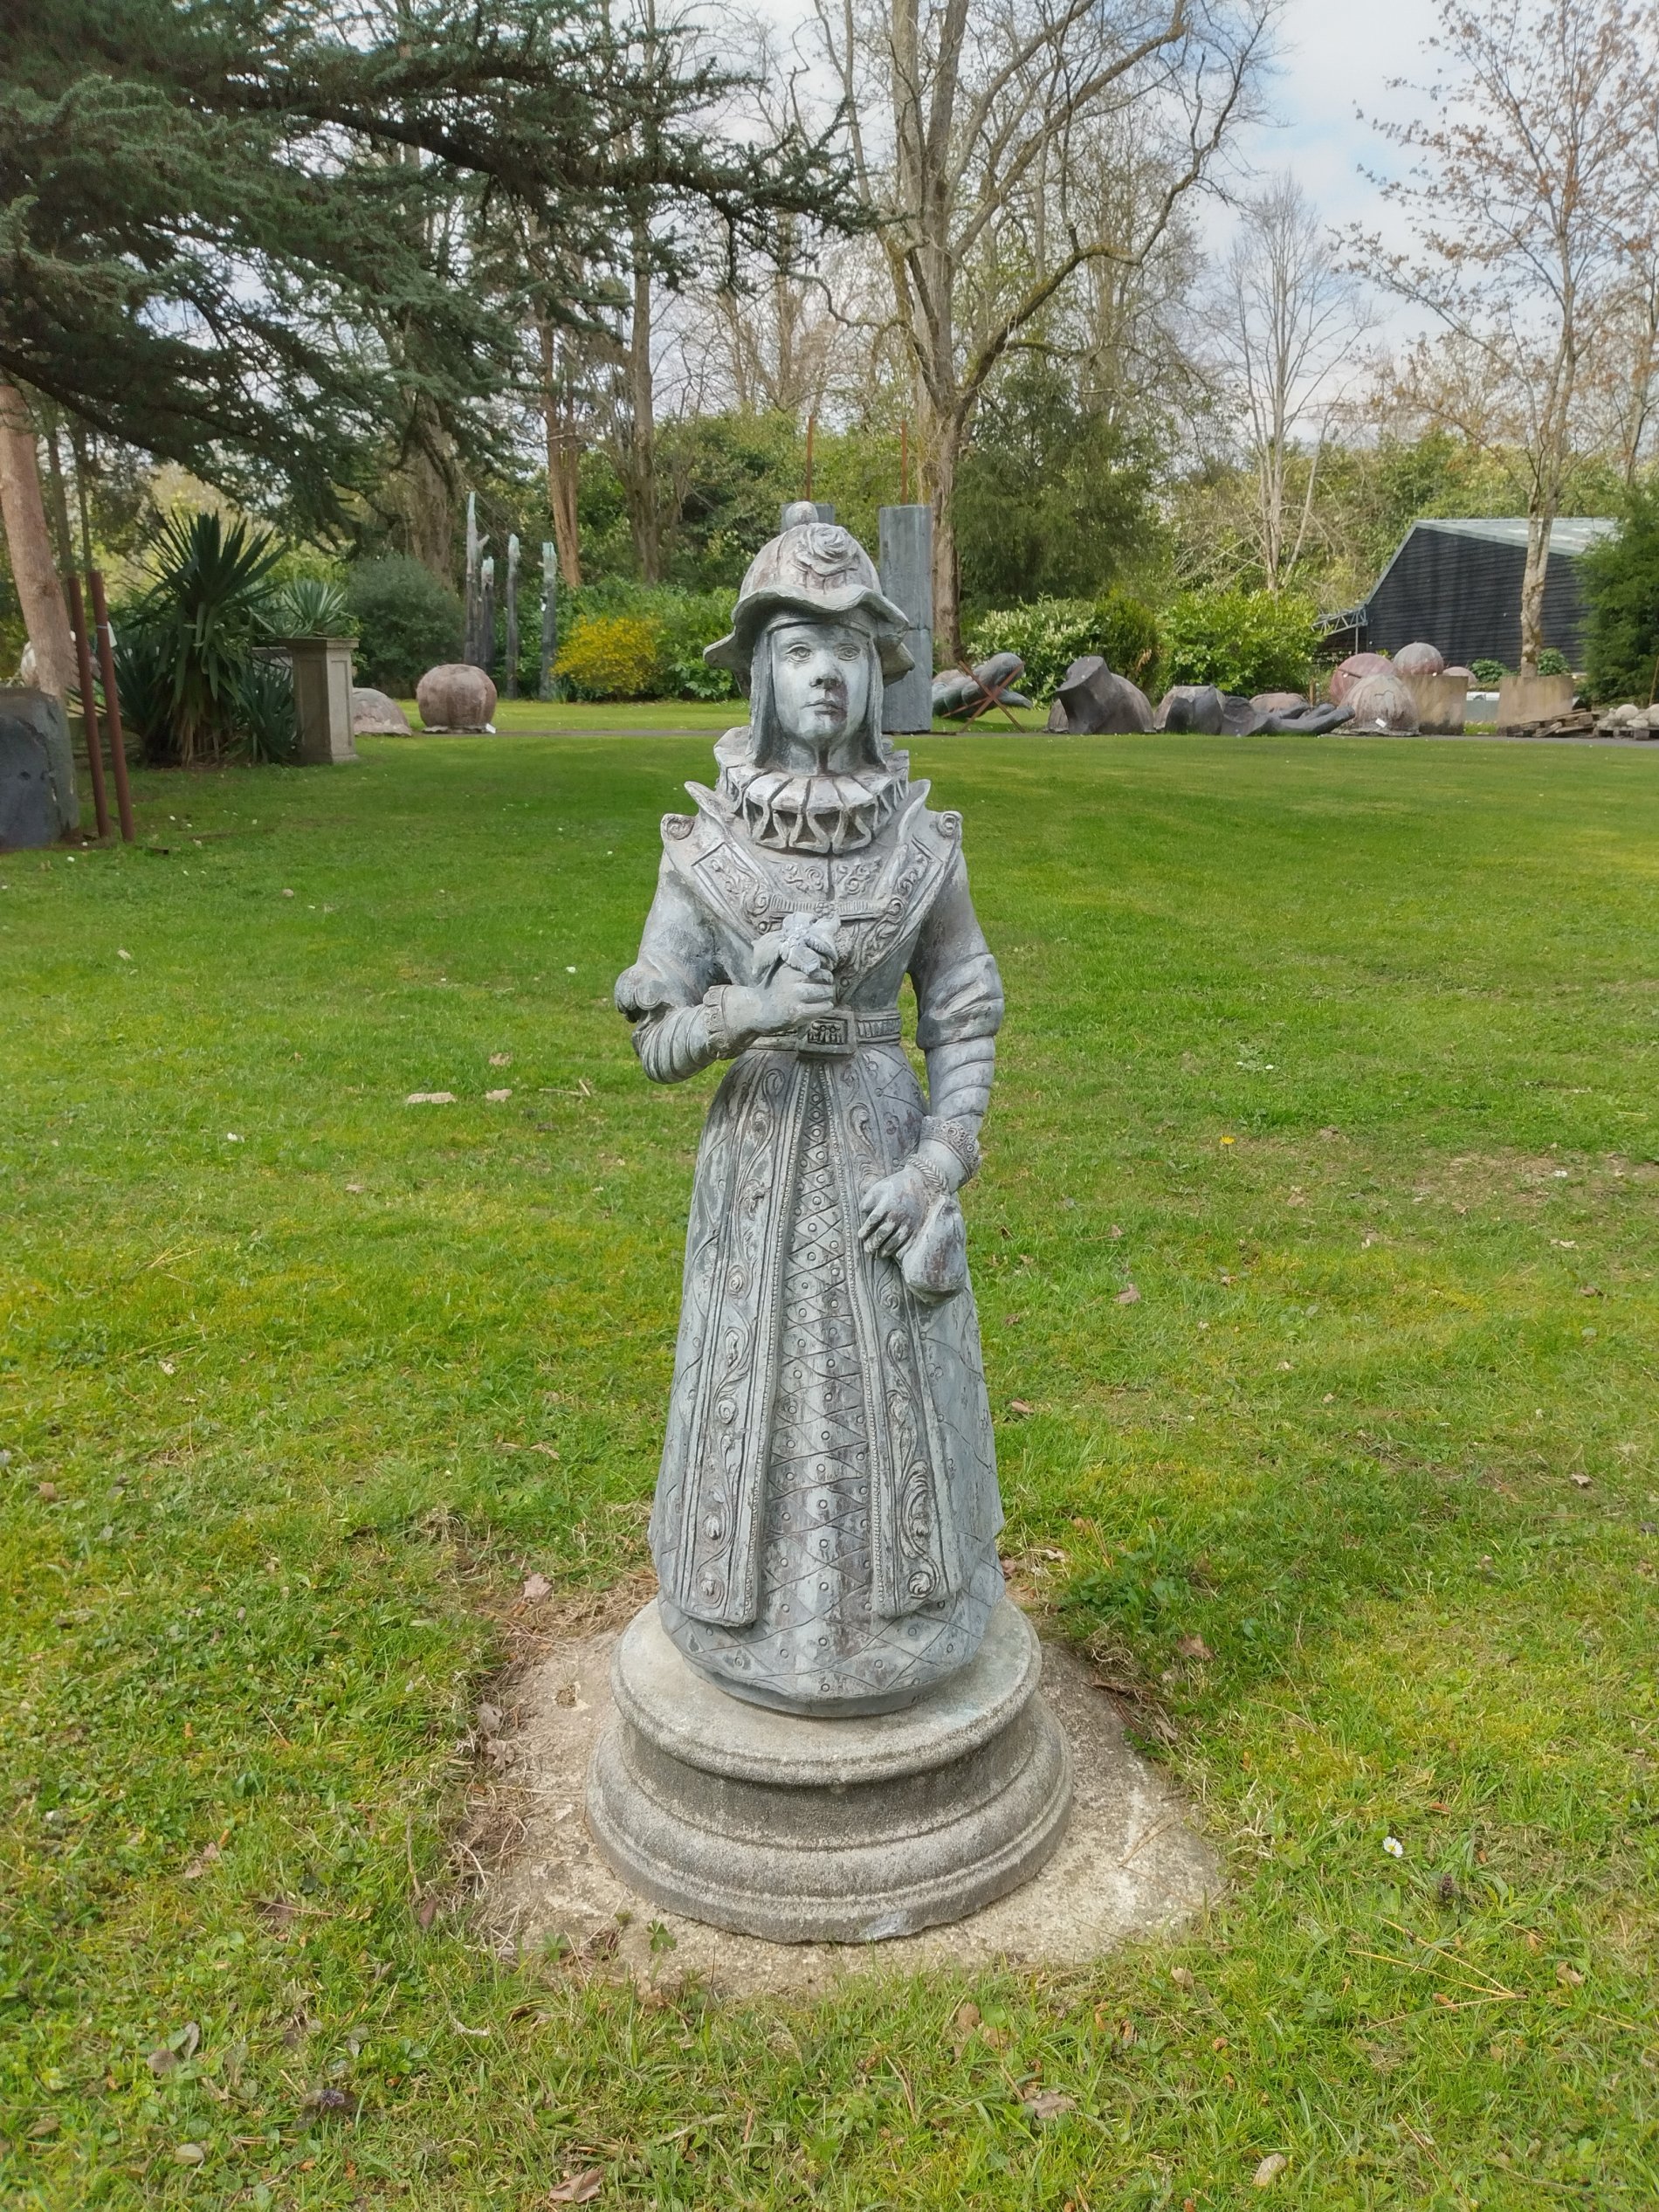 A figure of an Elizabethan girl on base